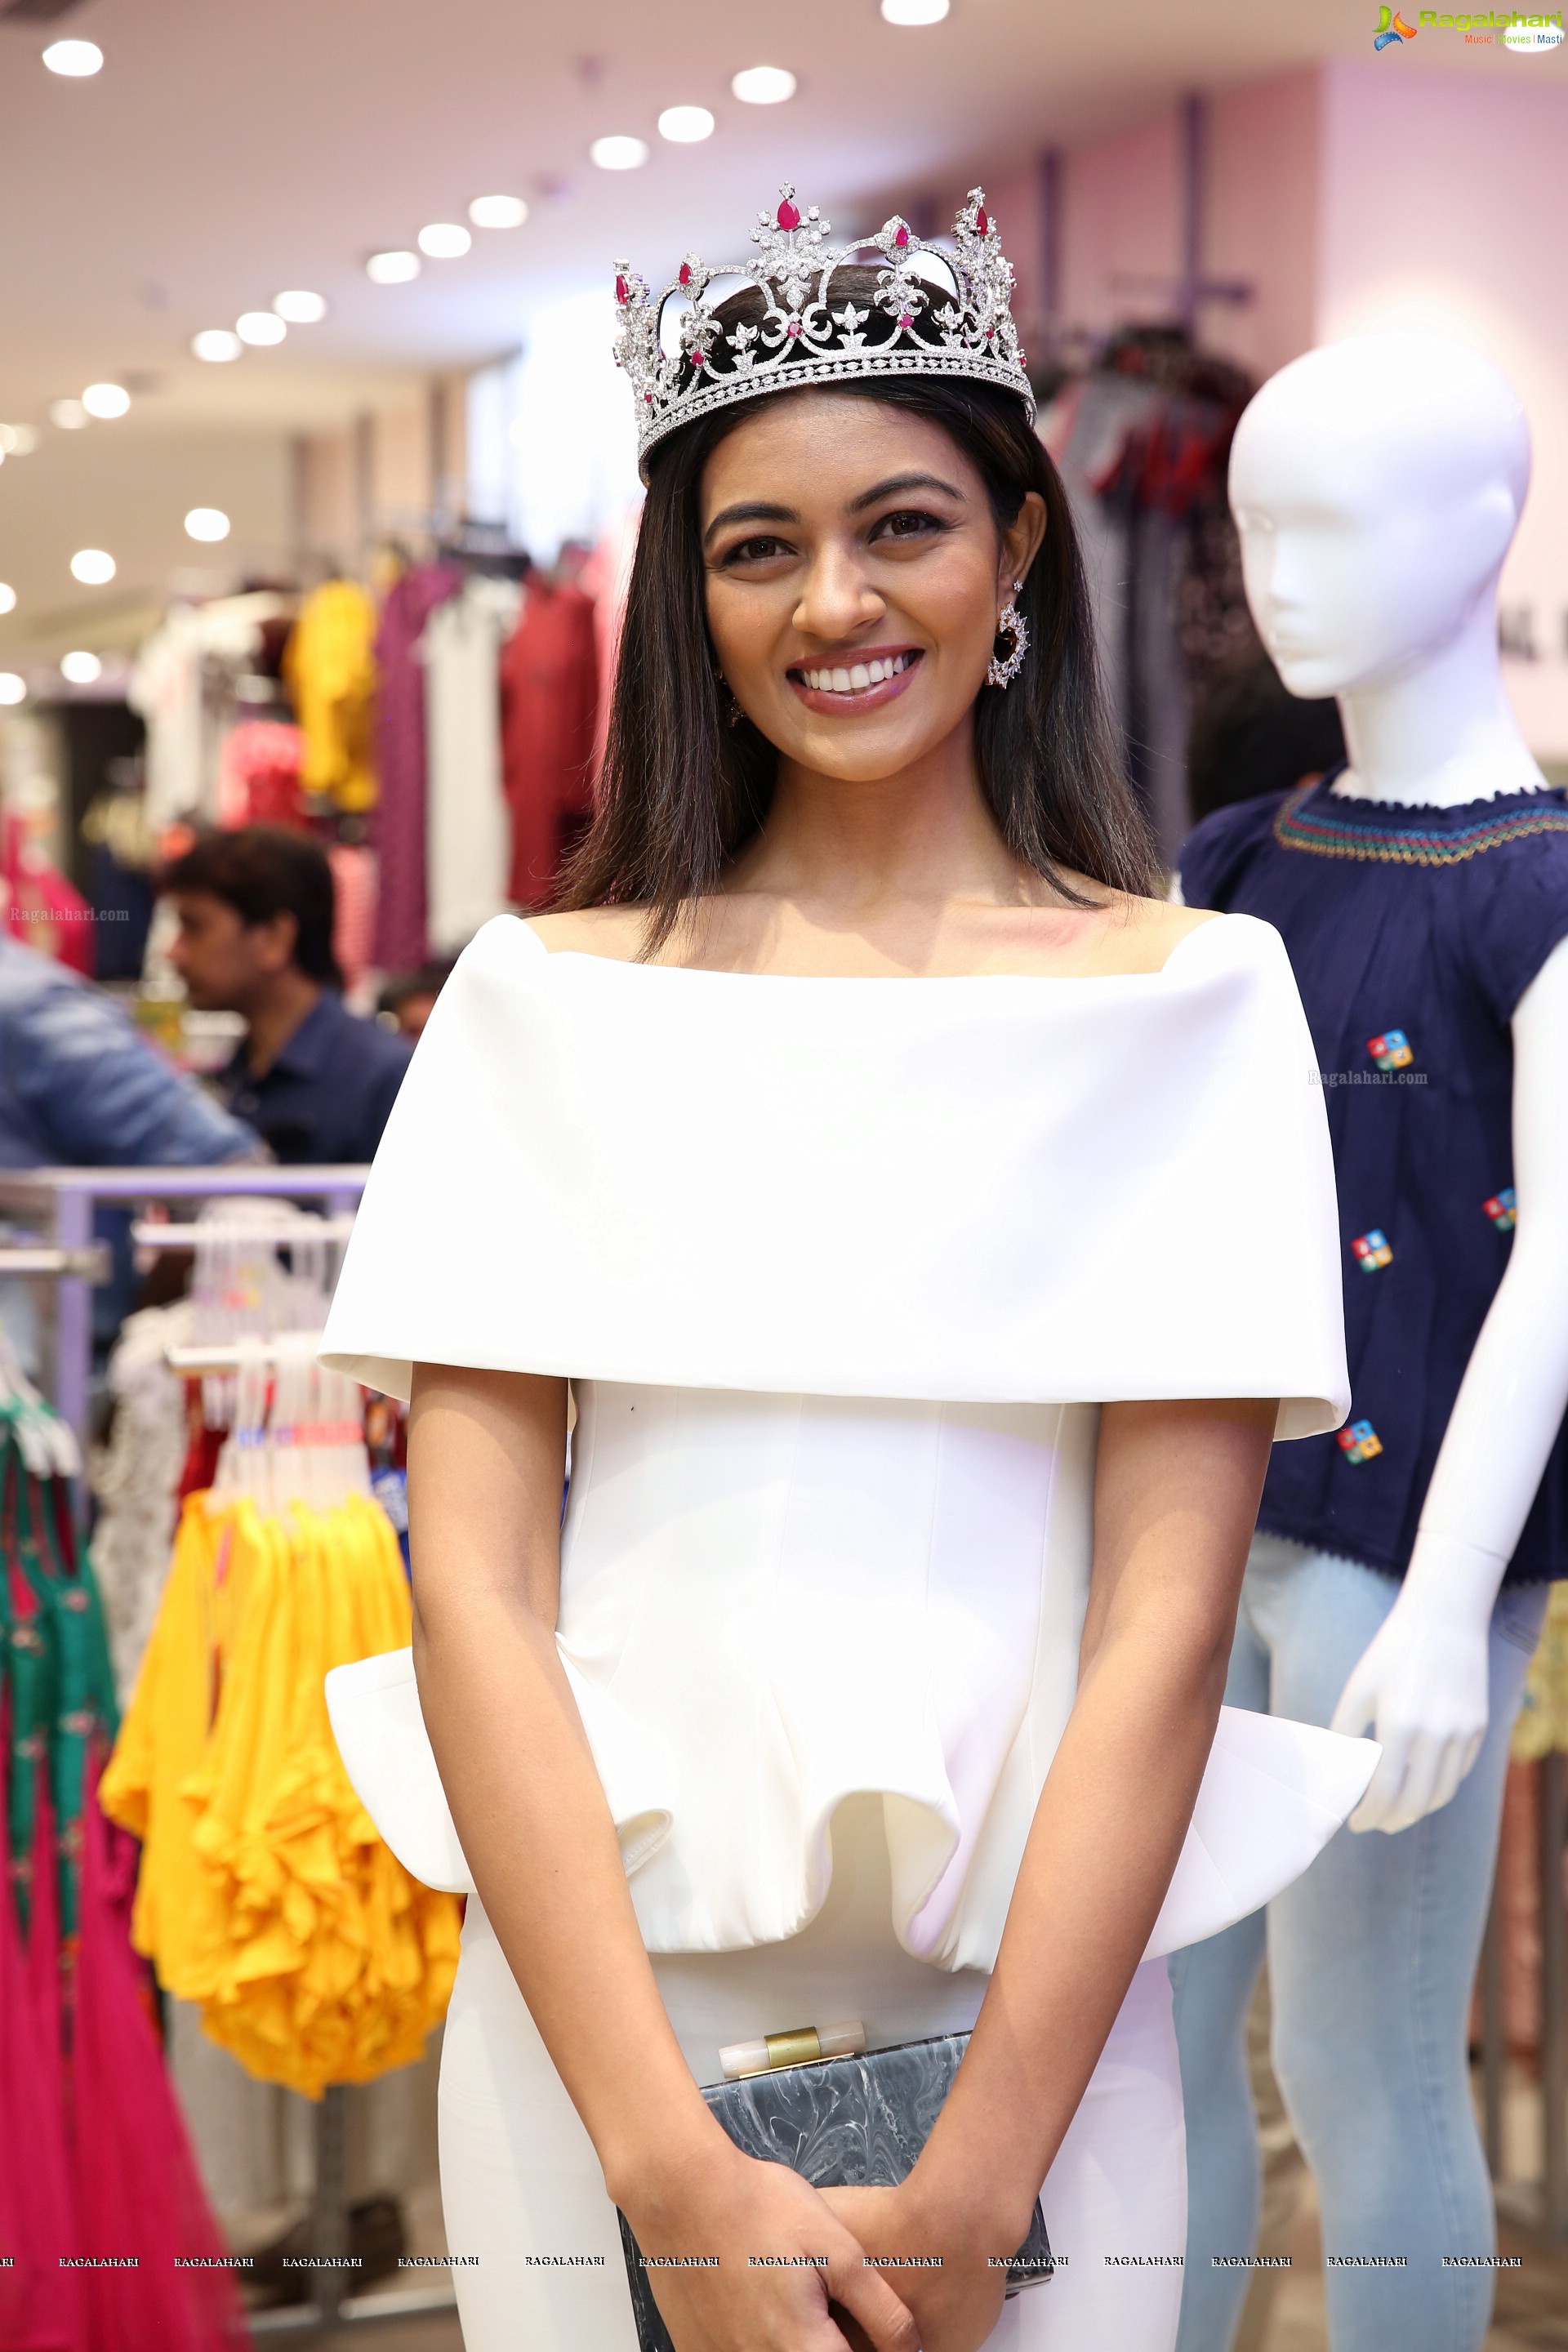 Shreya Rao @ 6th fbb Store Launch - HD Gallery